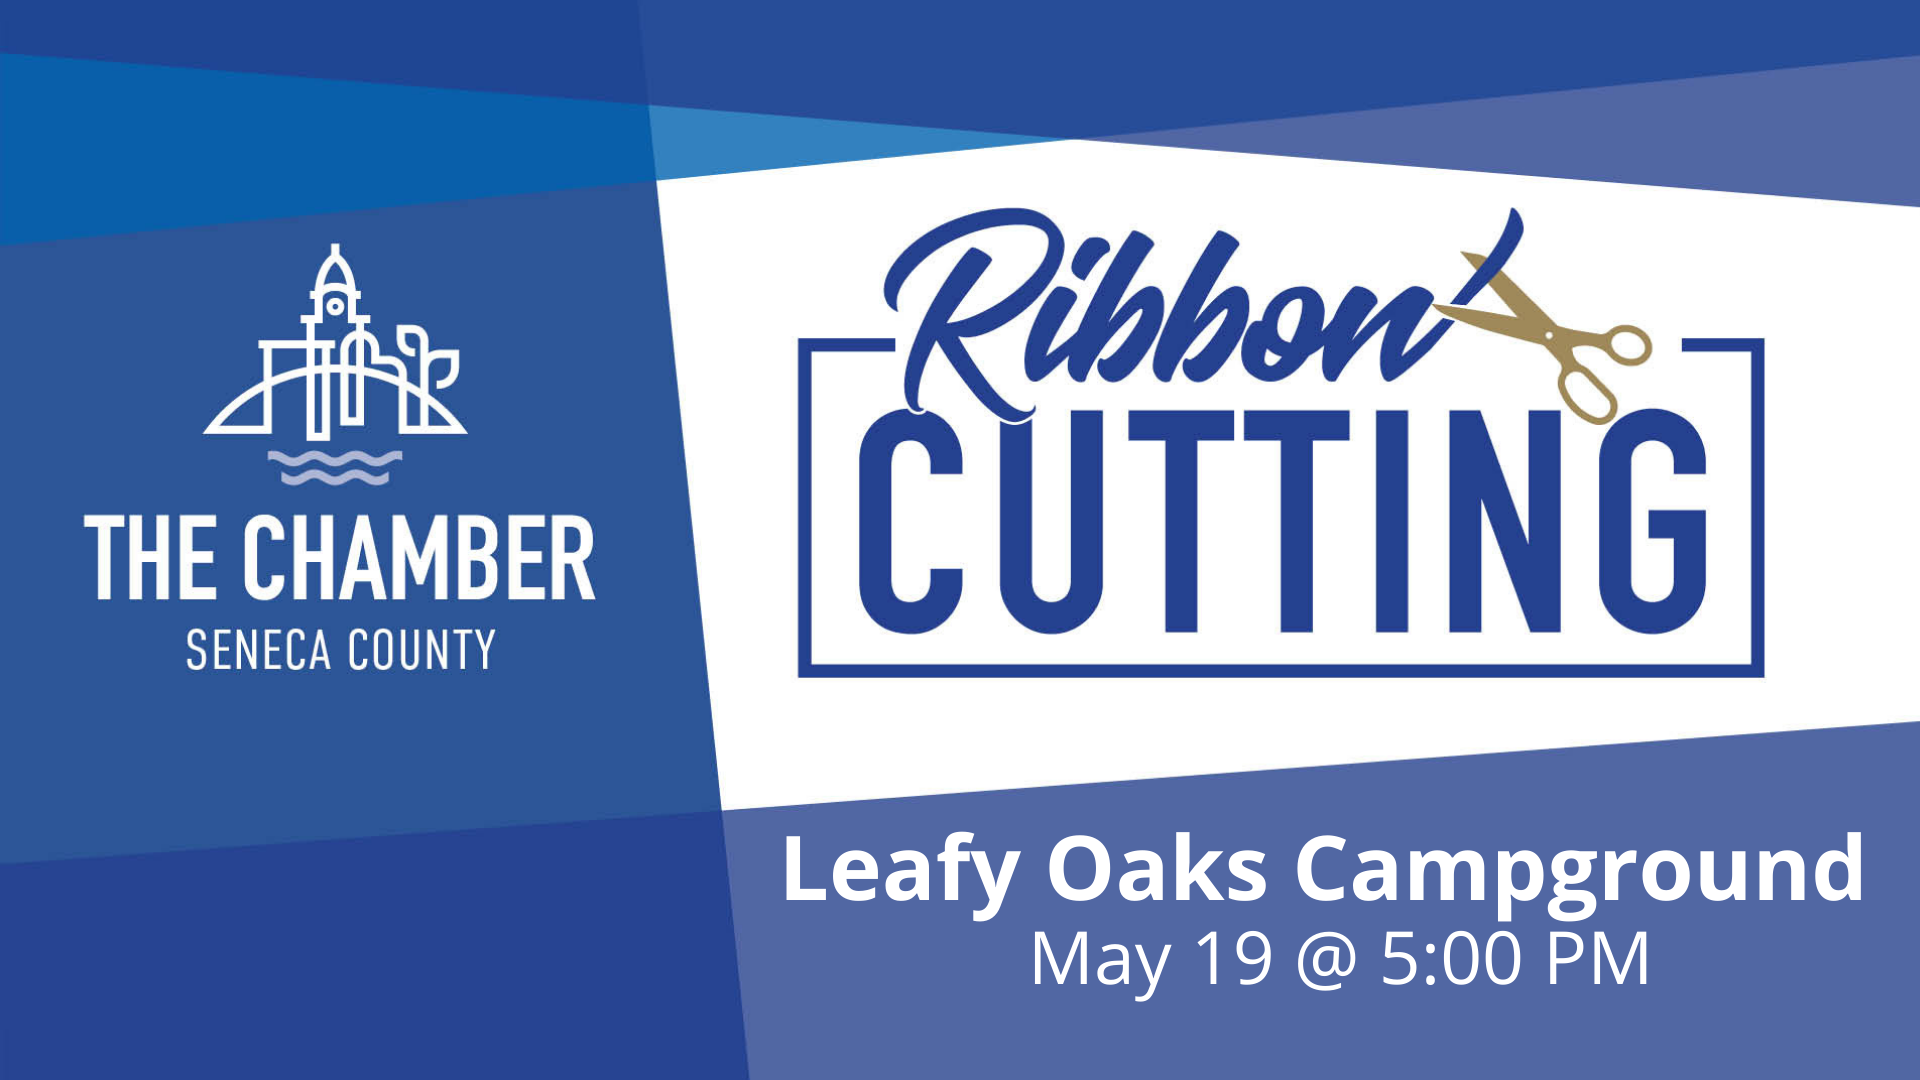 Ribbon Cutting Leafy Oaks Campground